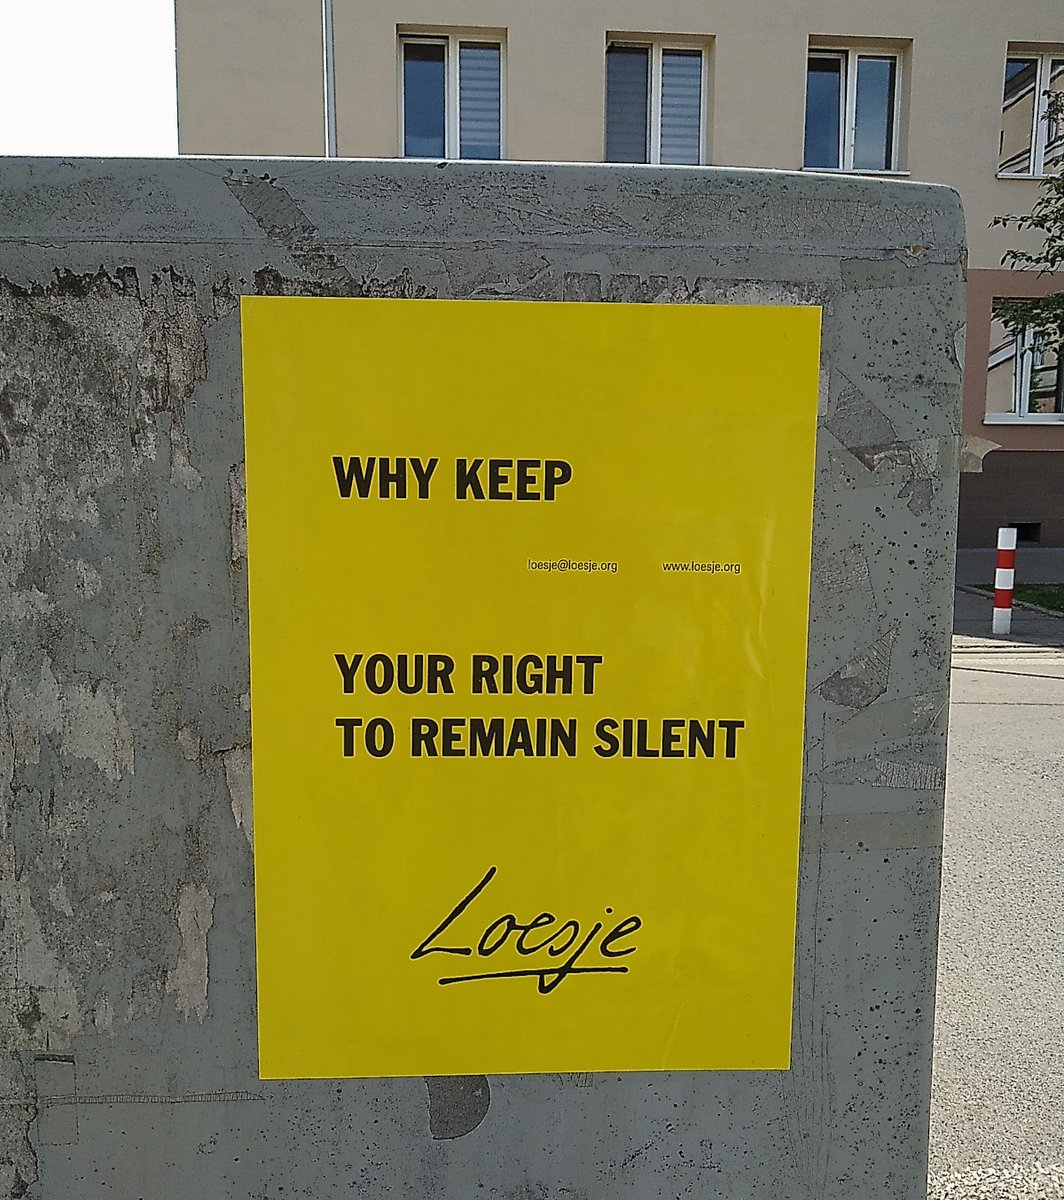 Why keep your right 
           to remain silent

#Loesje
#WorldPressFreedomDay #pressfreedom 
#freemedia #freedomofspeech #freedomofexpression